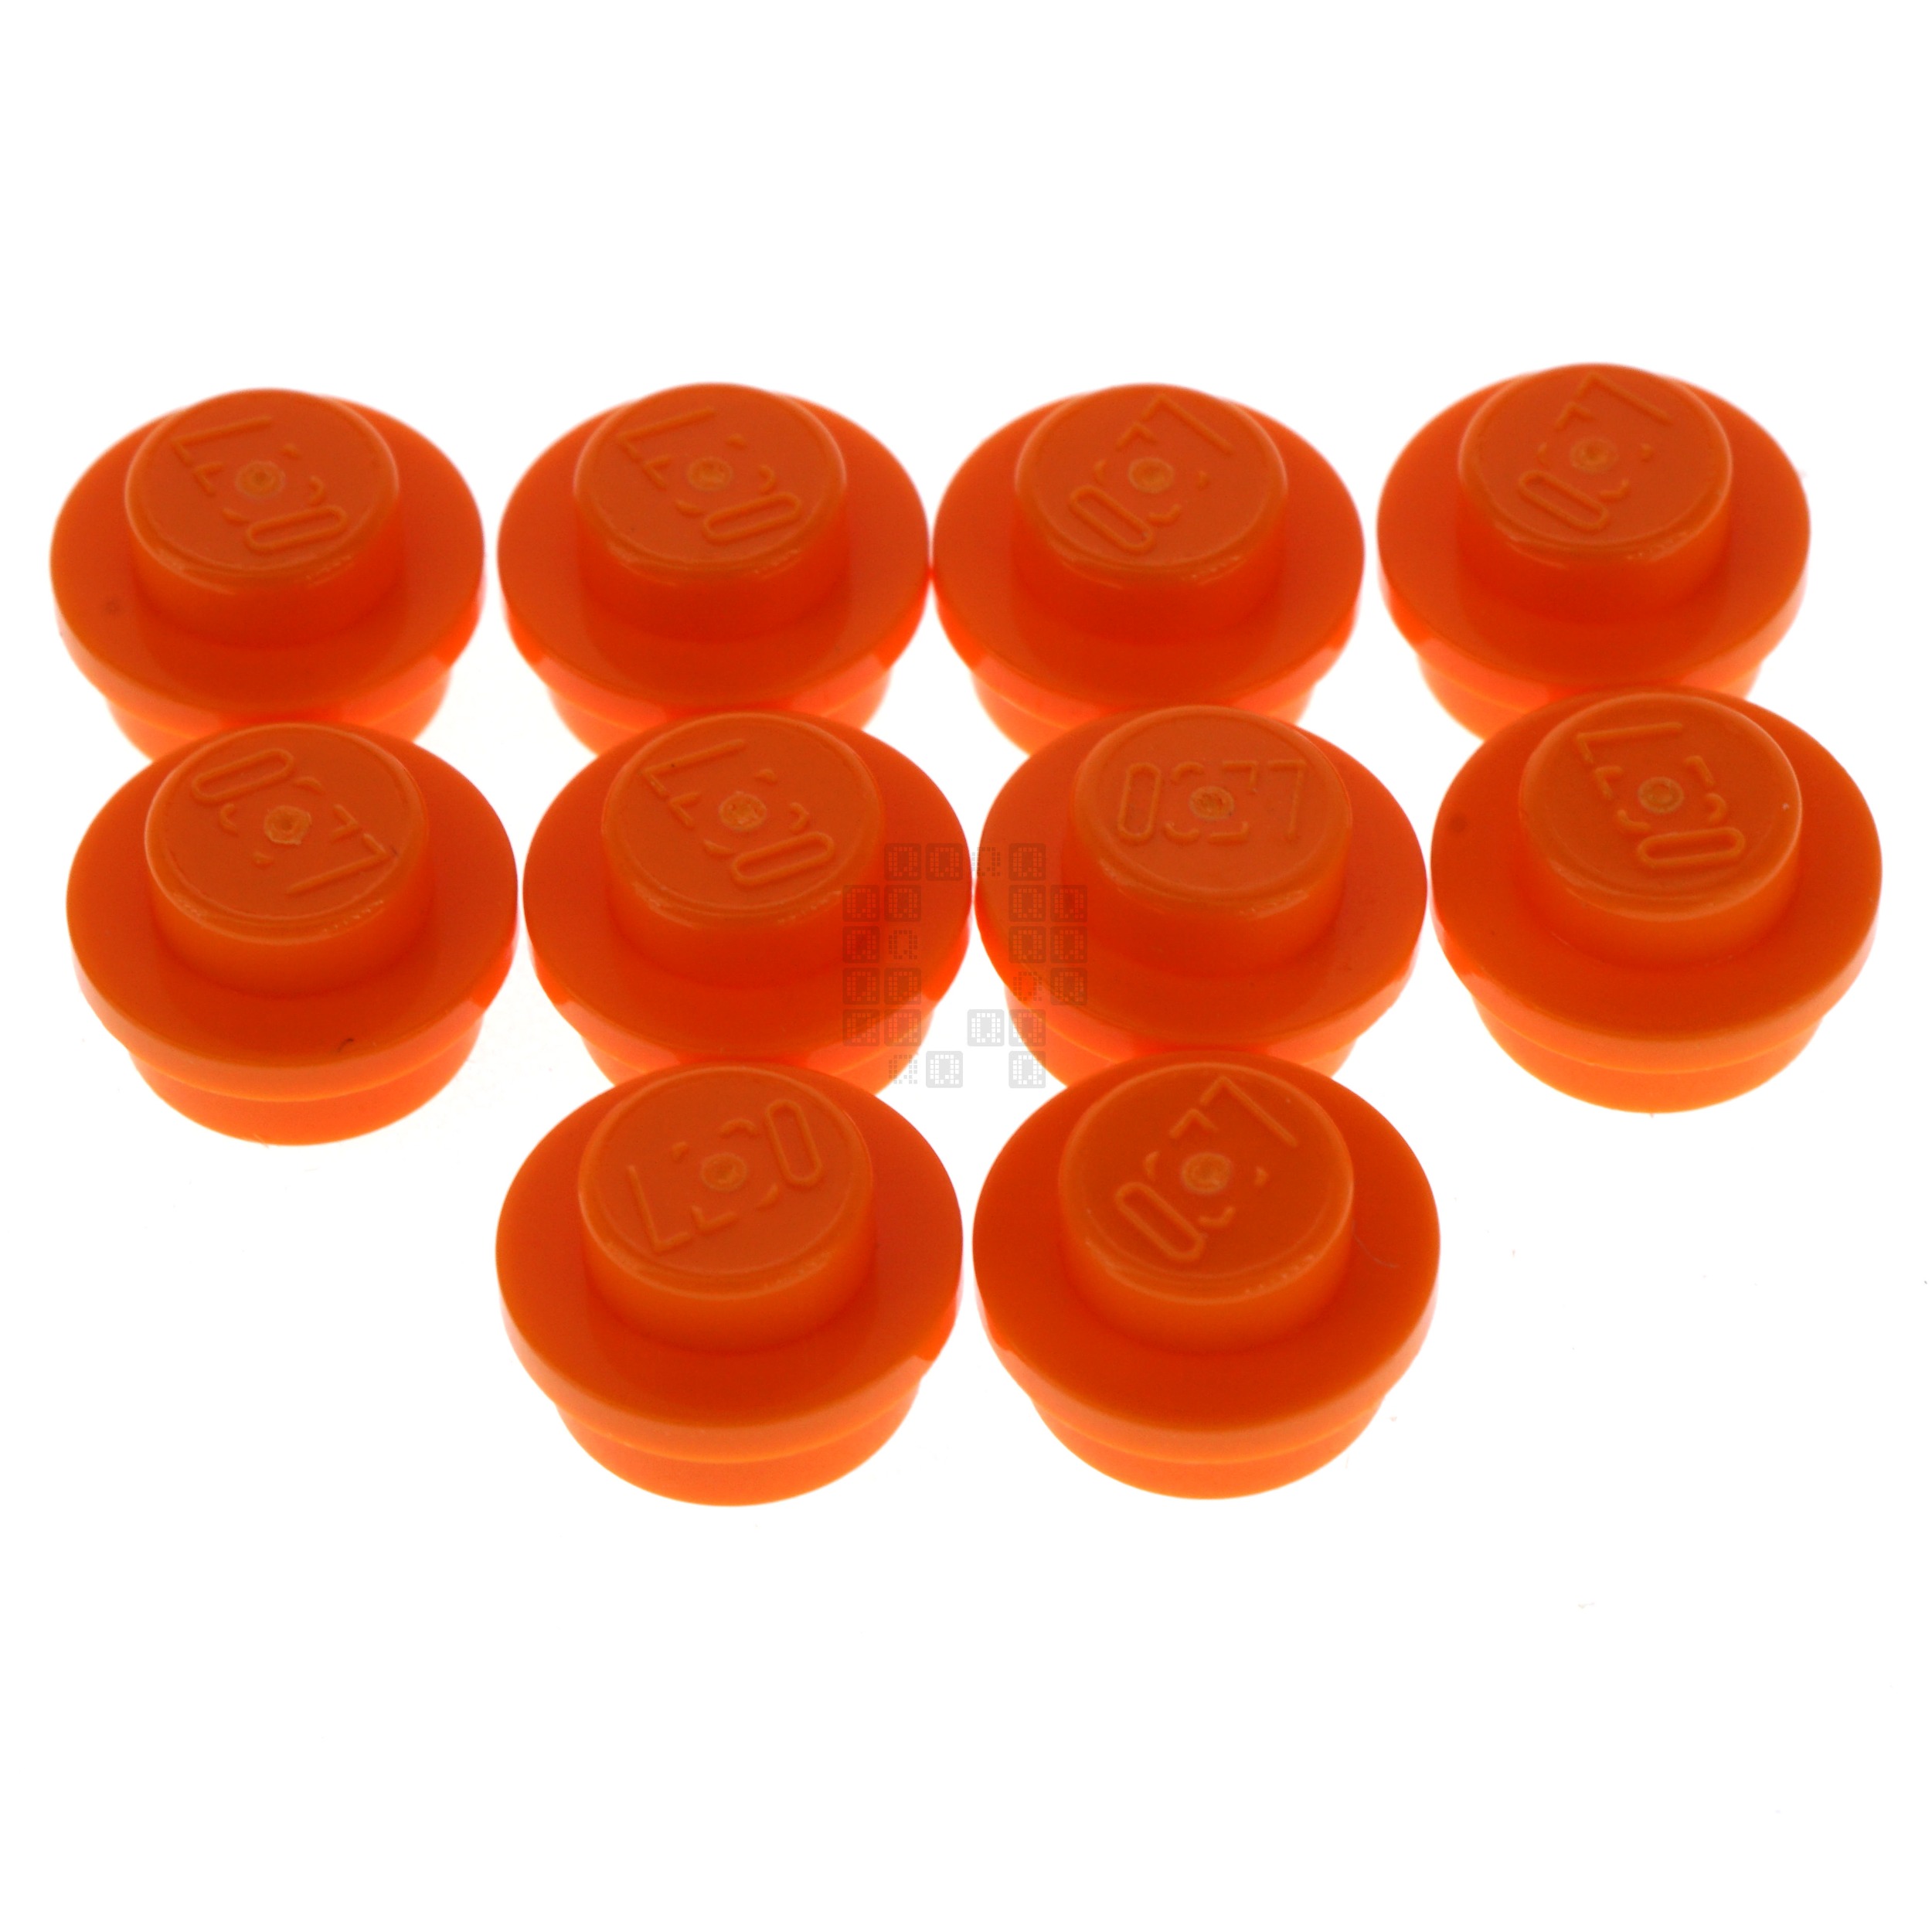 LEGO 4157103 1x1 Round Plate, Bright Orange, 10-Pack